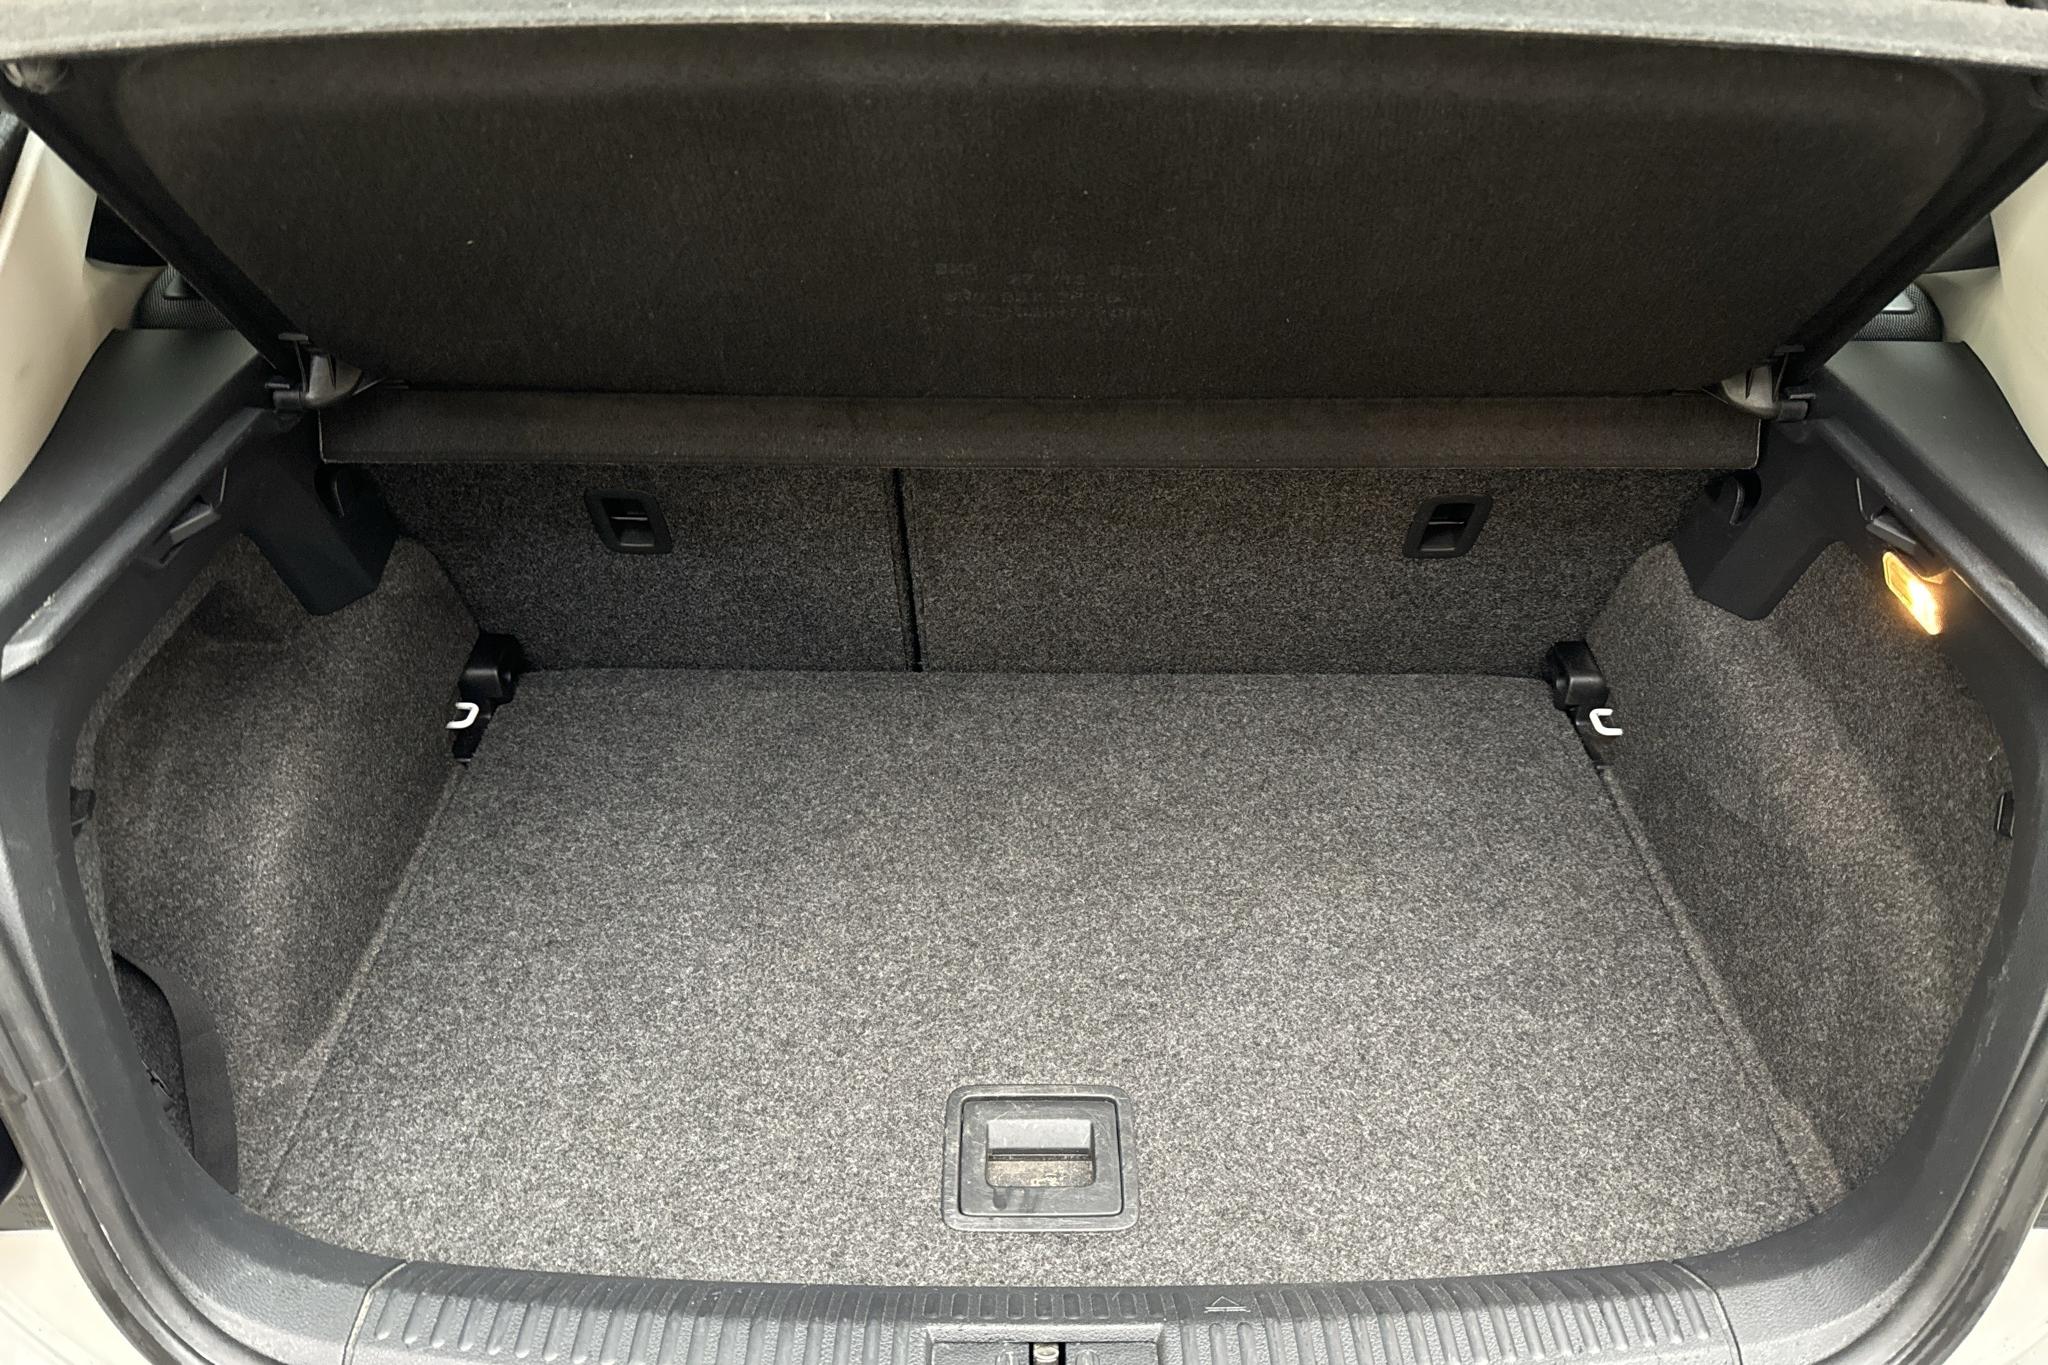 VW Polo 1.2 TSI 5dr (90hk) - 14 227 mil - Manuell - vit - 2013